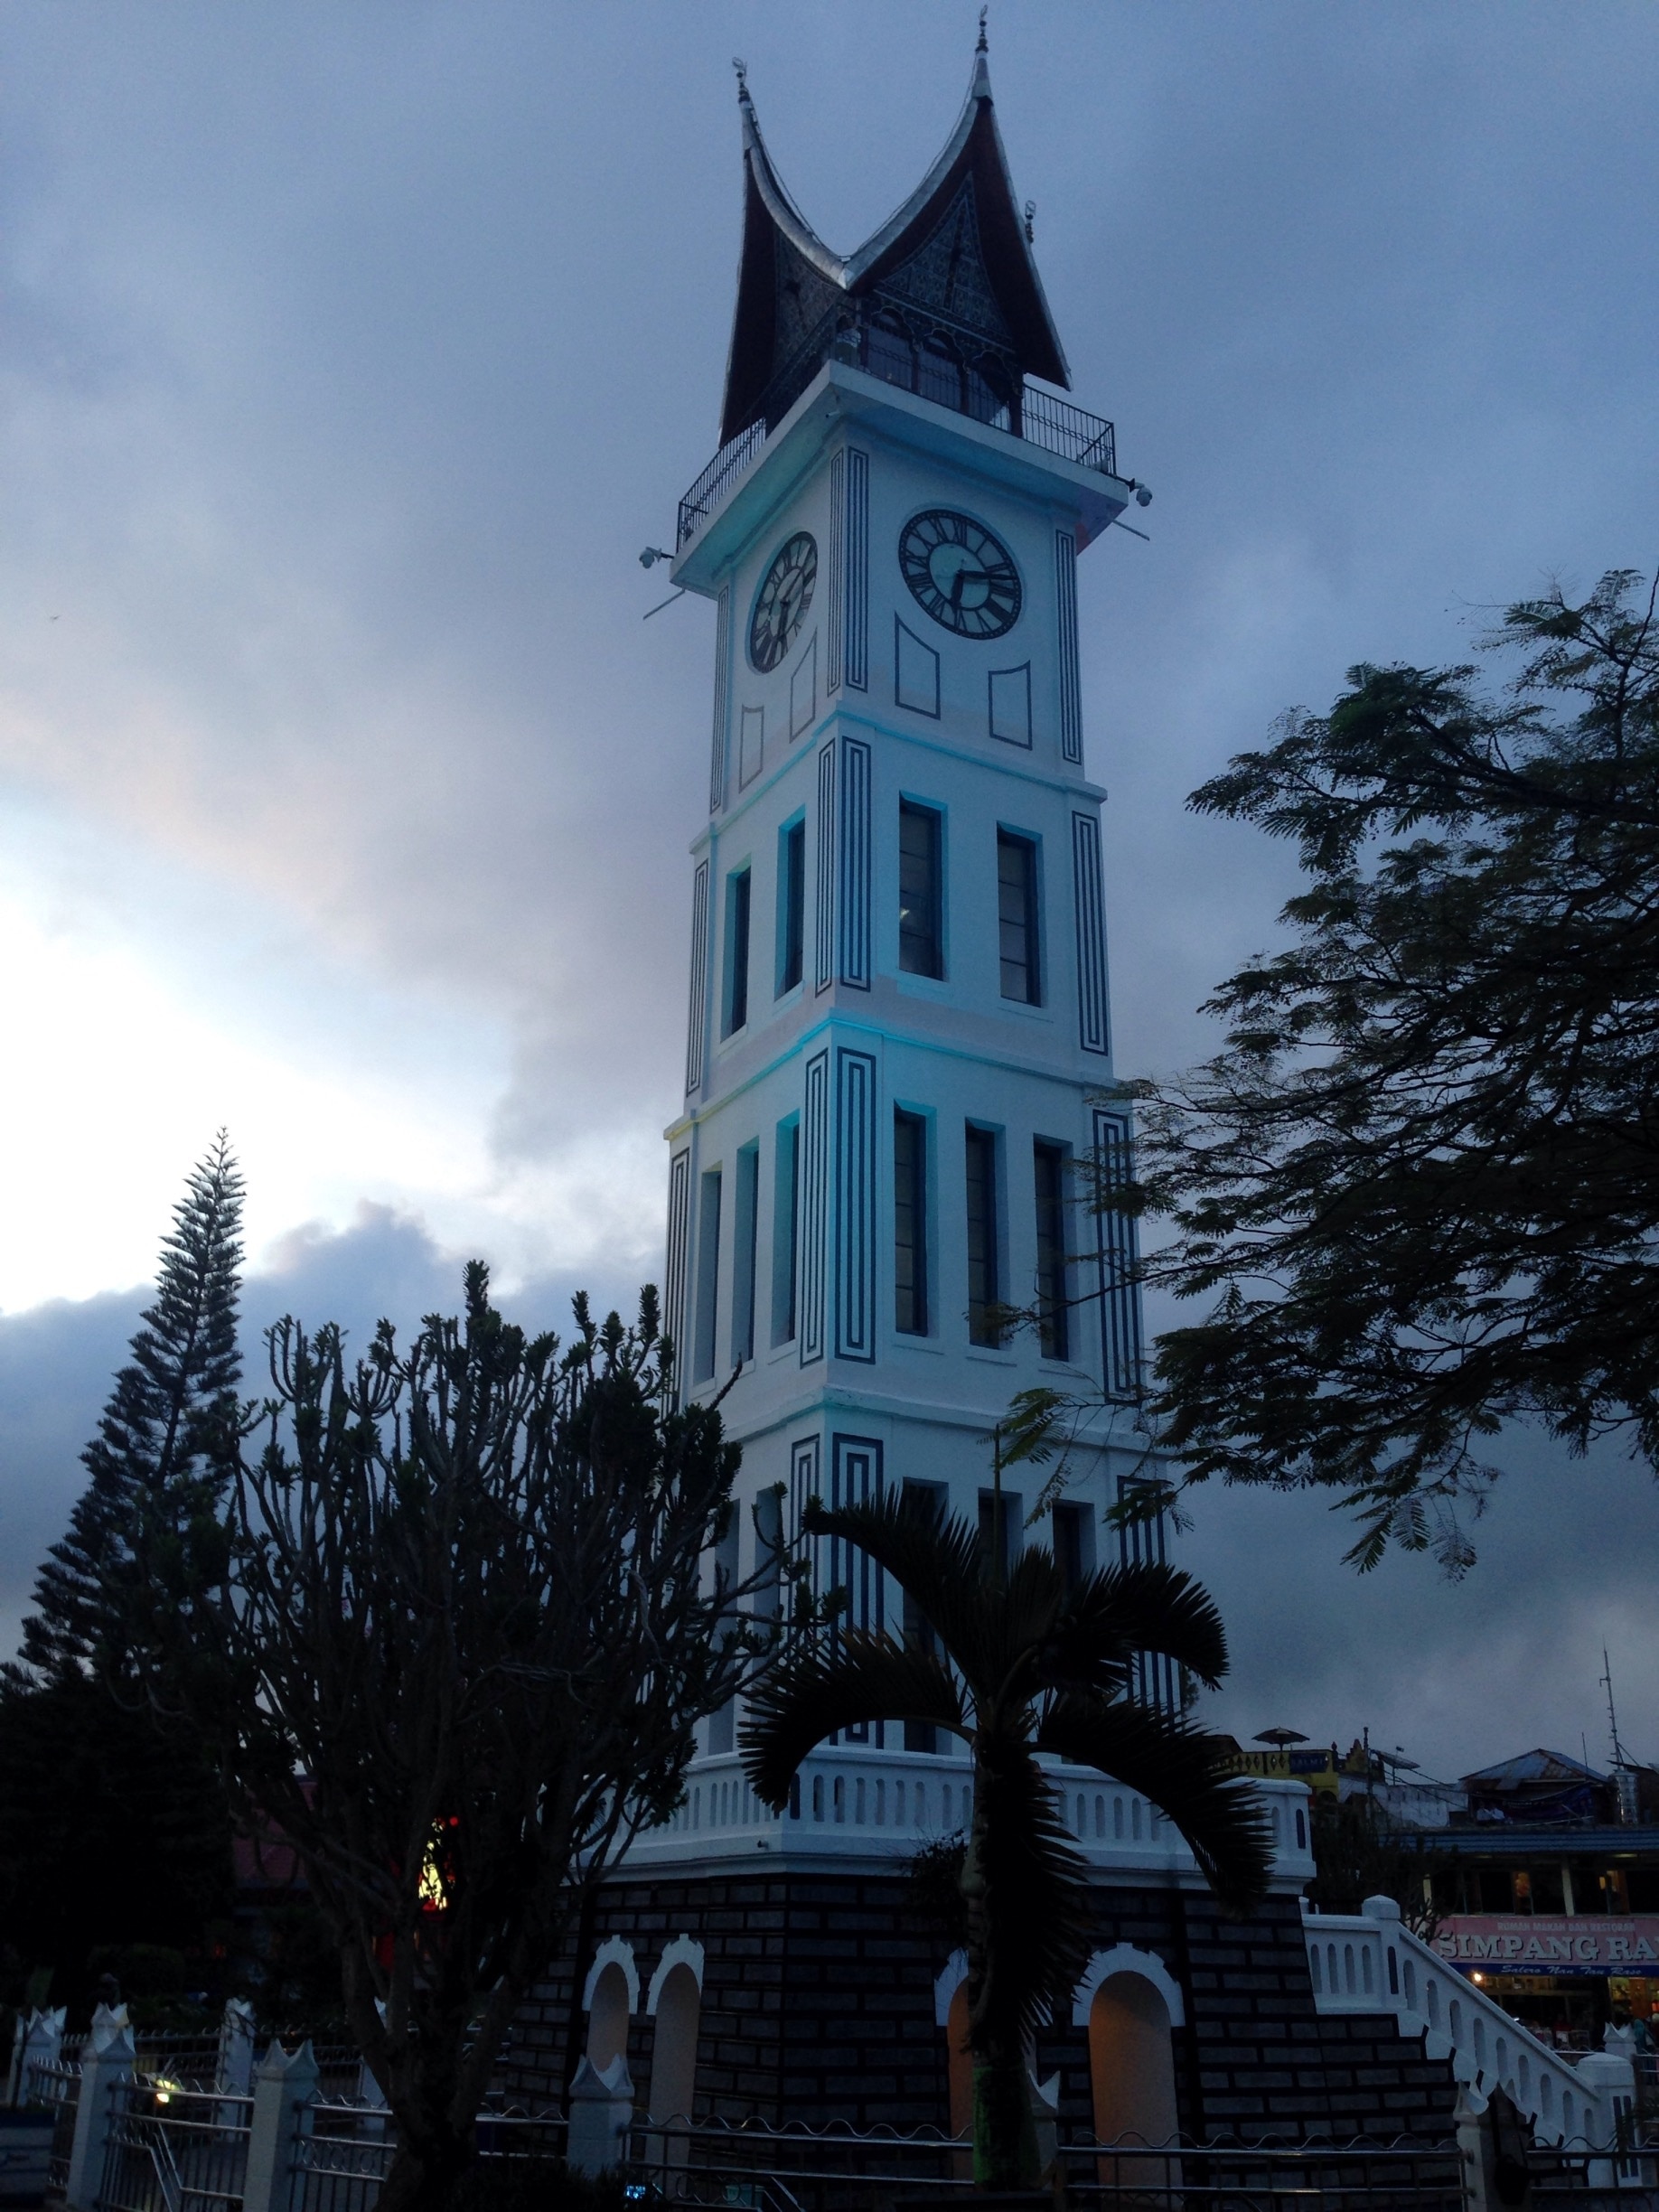 Bukit tinggi city with Gadang clock monument located in front of Pasar Tinggi #monument #lateafternoon #bukittinggi #padang #westsumatra #nofilter 